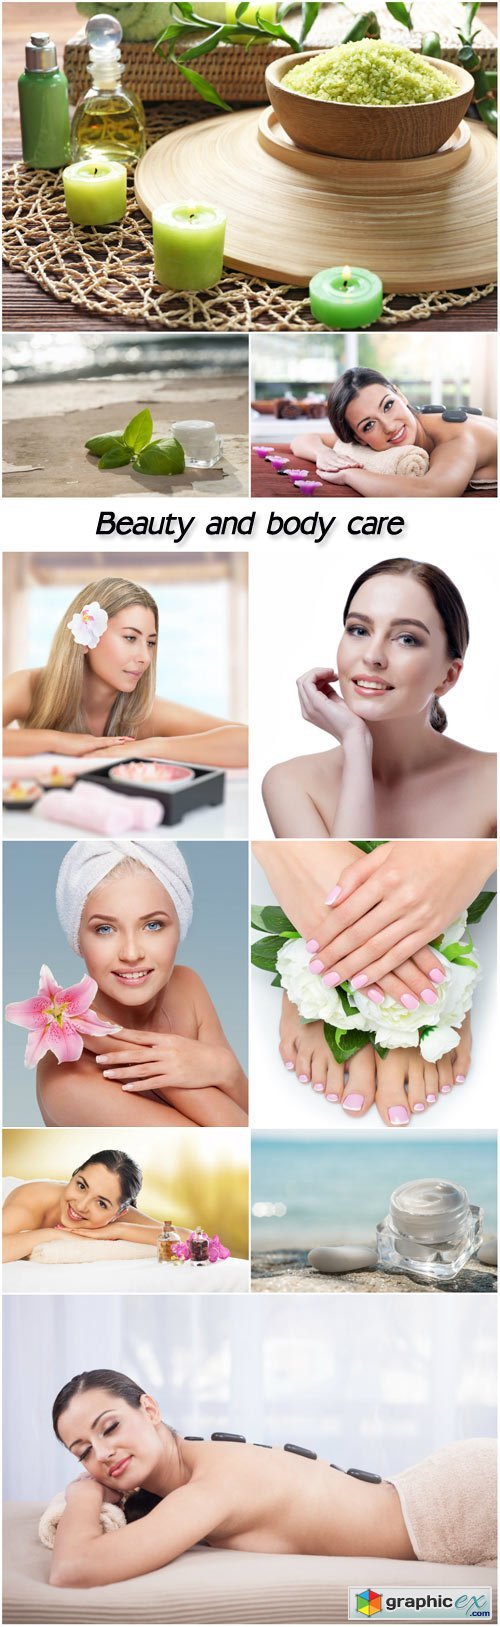 Beauty and body care, spa salon